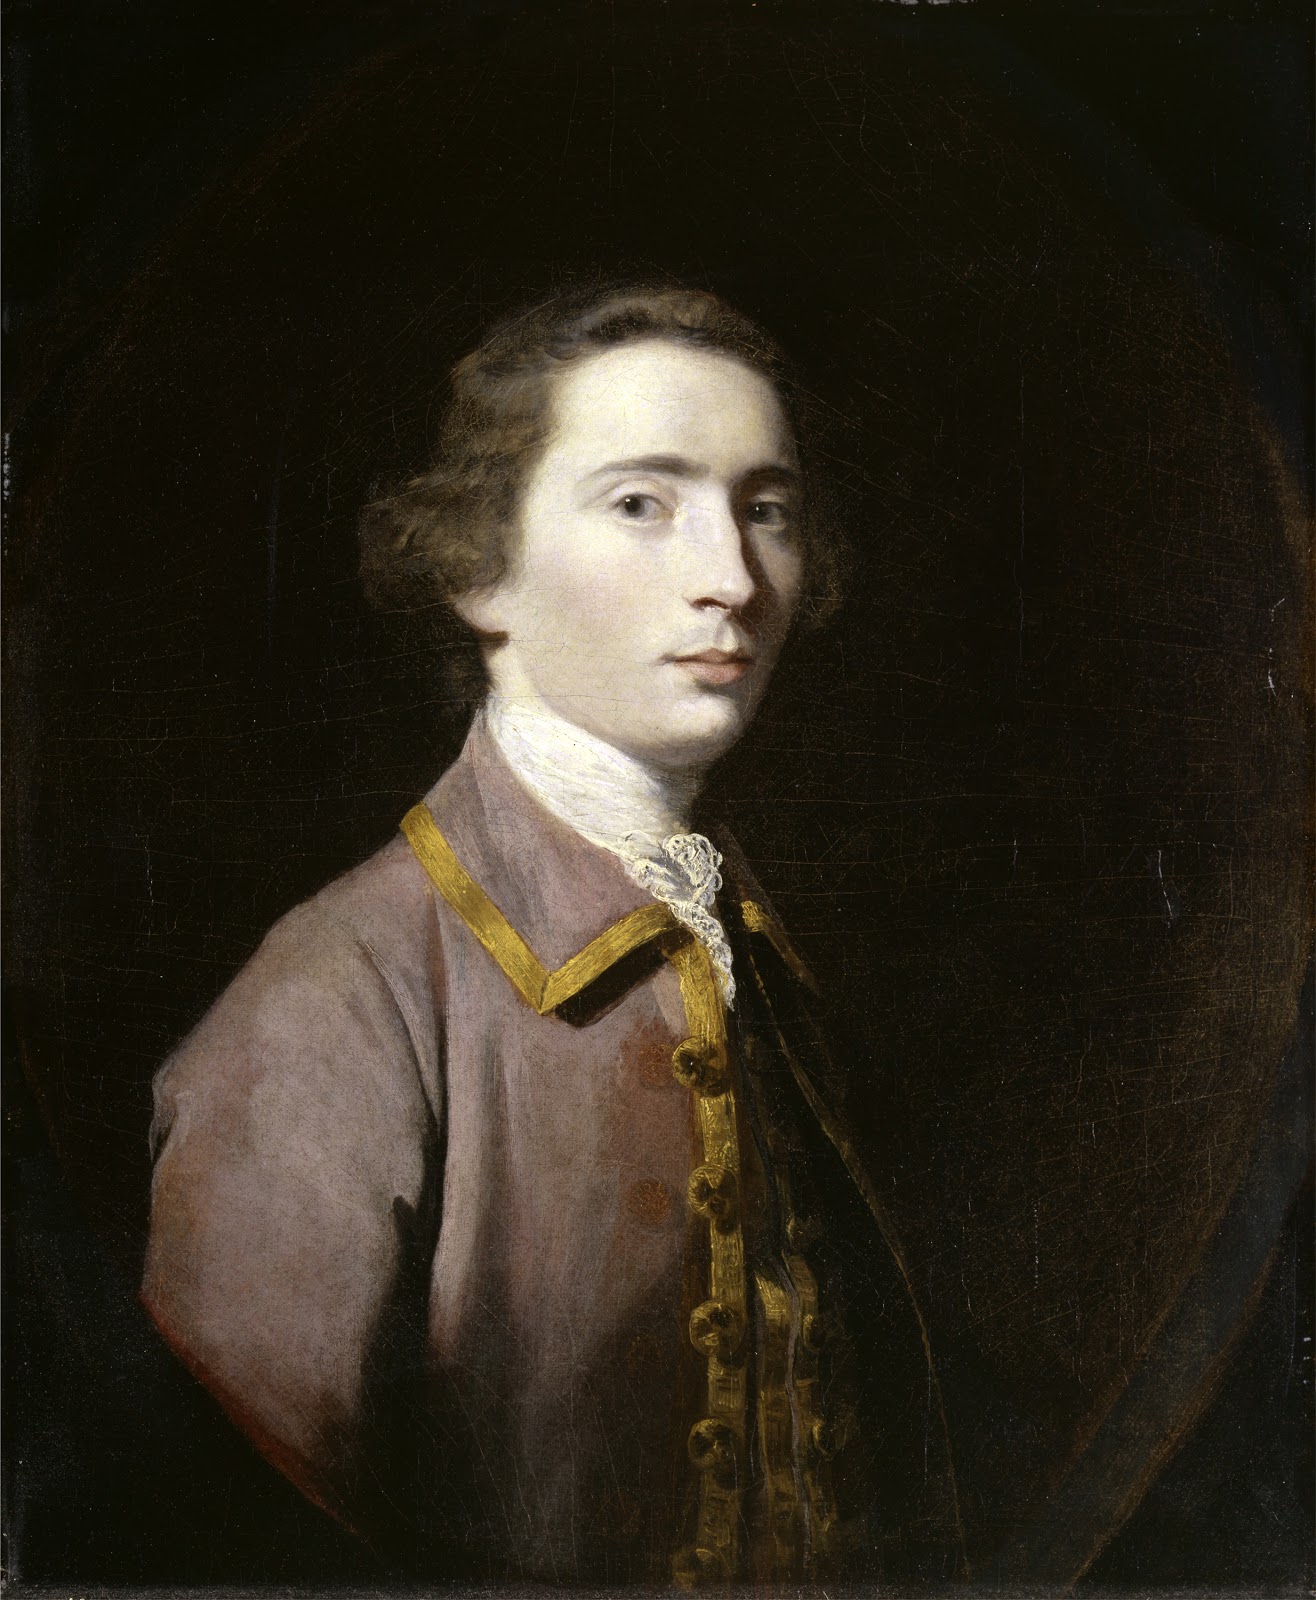 Joshua+Reynolds-1723-1792 (81).jpg